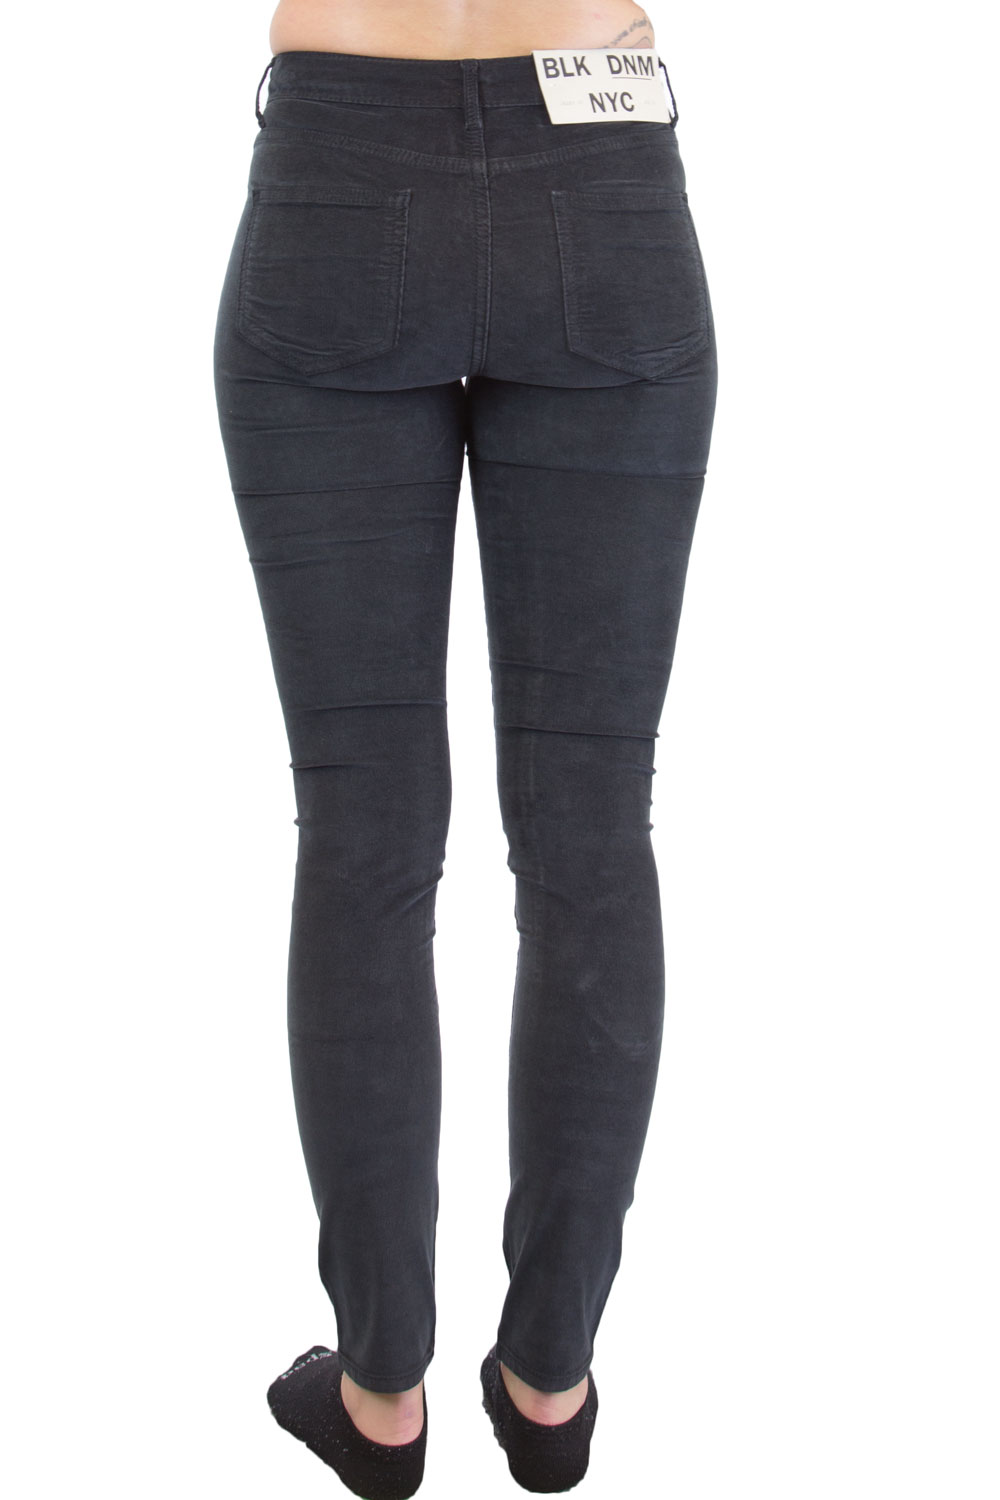 BLK DNM Women's Washed Black Corduroy Jeans WJ990201 215